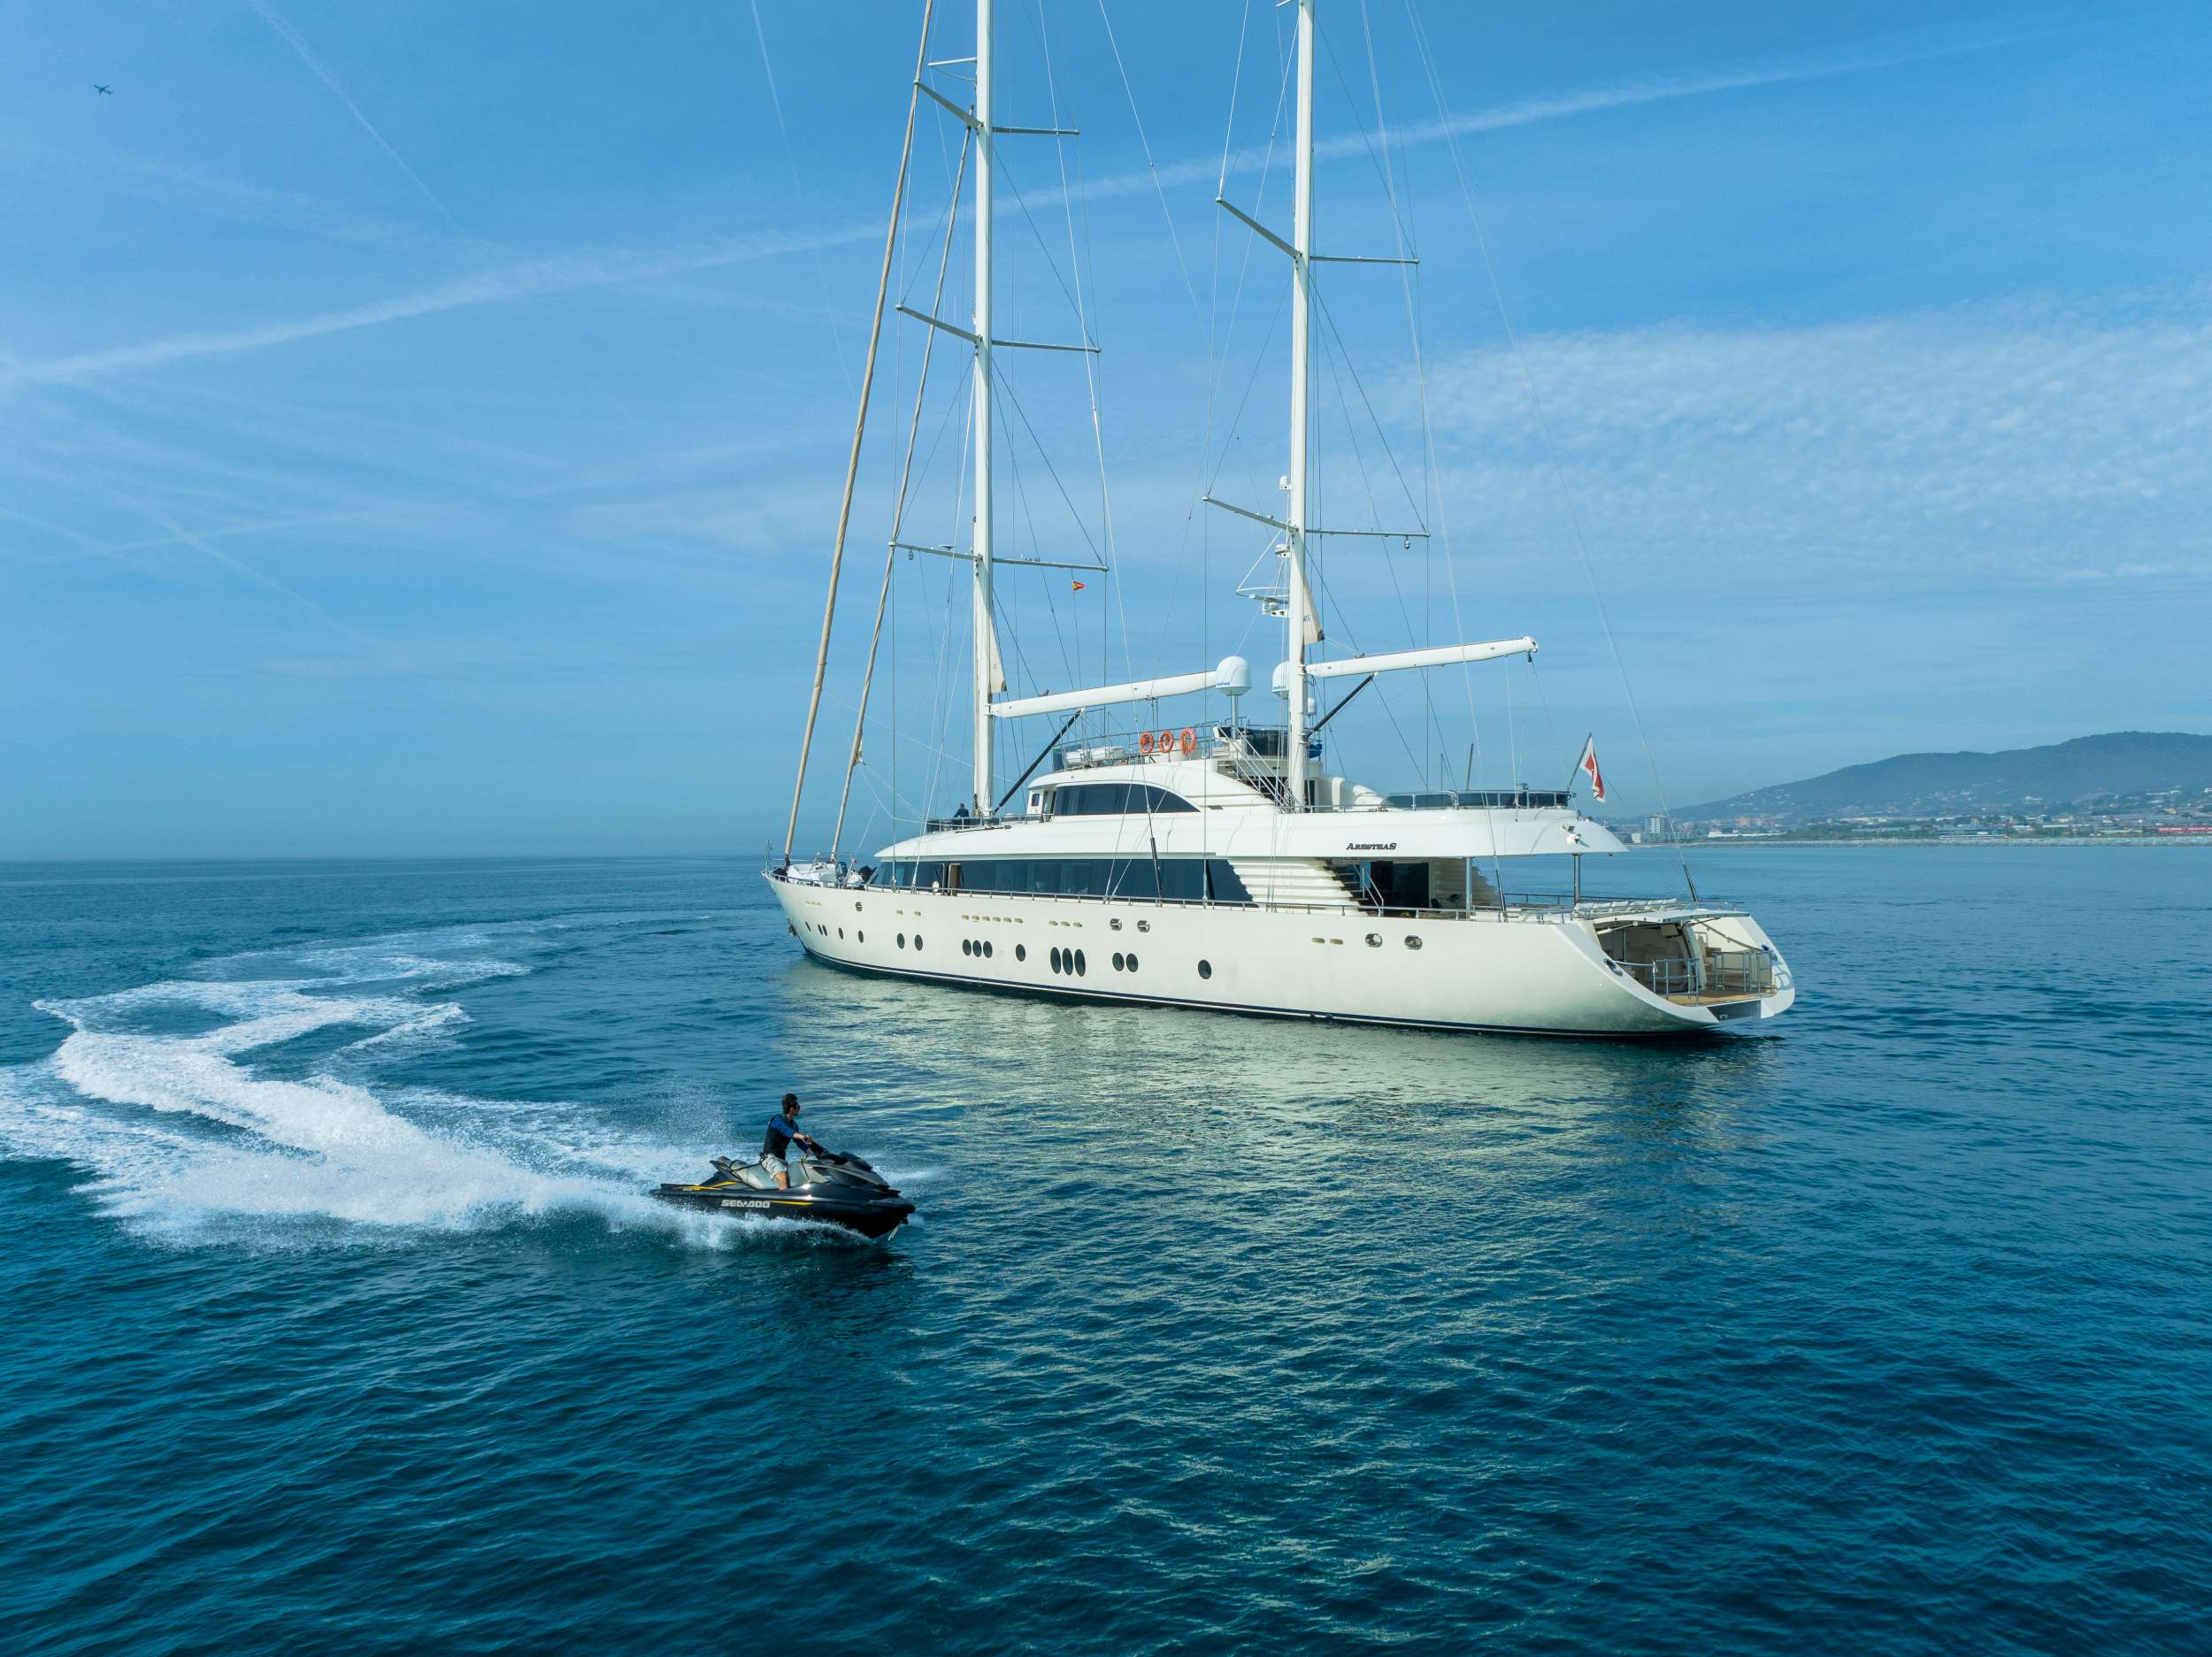 ARESTEAS - Yacht Charter Port de Pollença & Boat hire in W. Med -Naples/Sicily, W. Med -Riviera/Cors/Sard., W. Med - Spain/Balearics 1